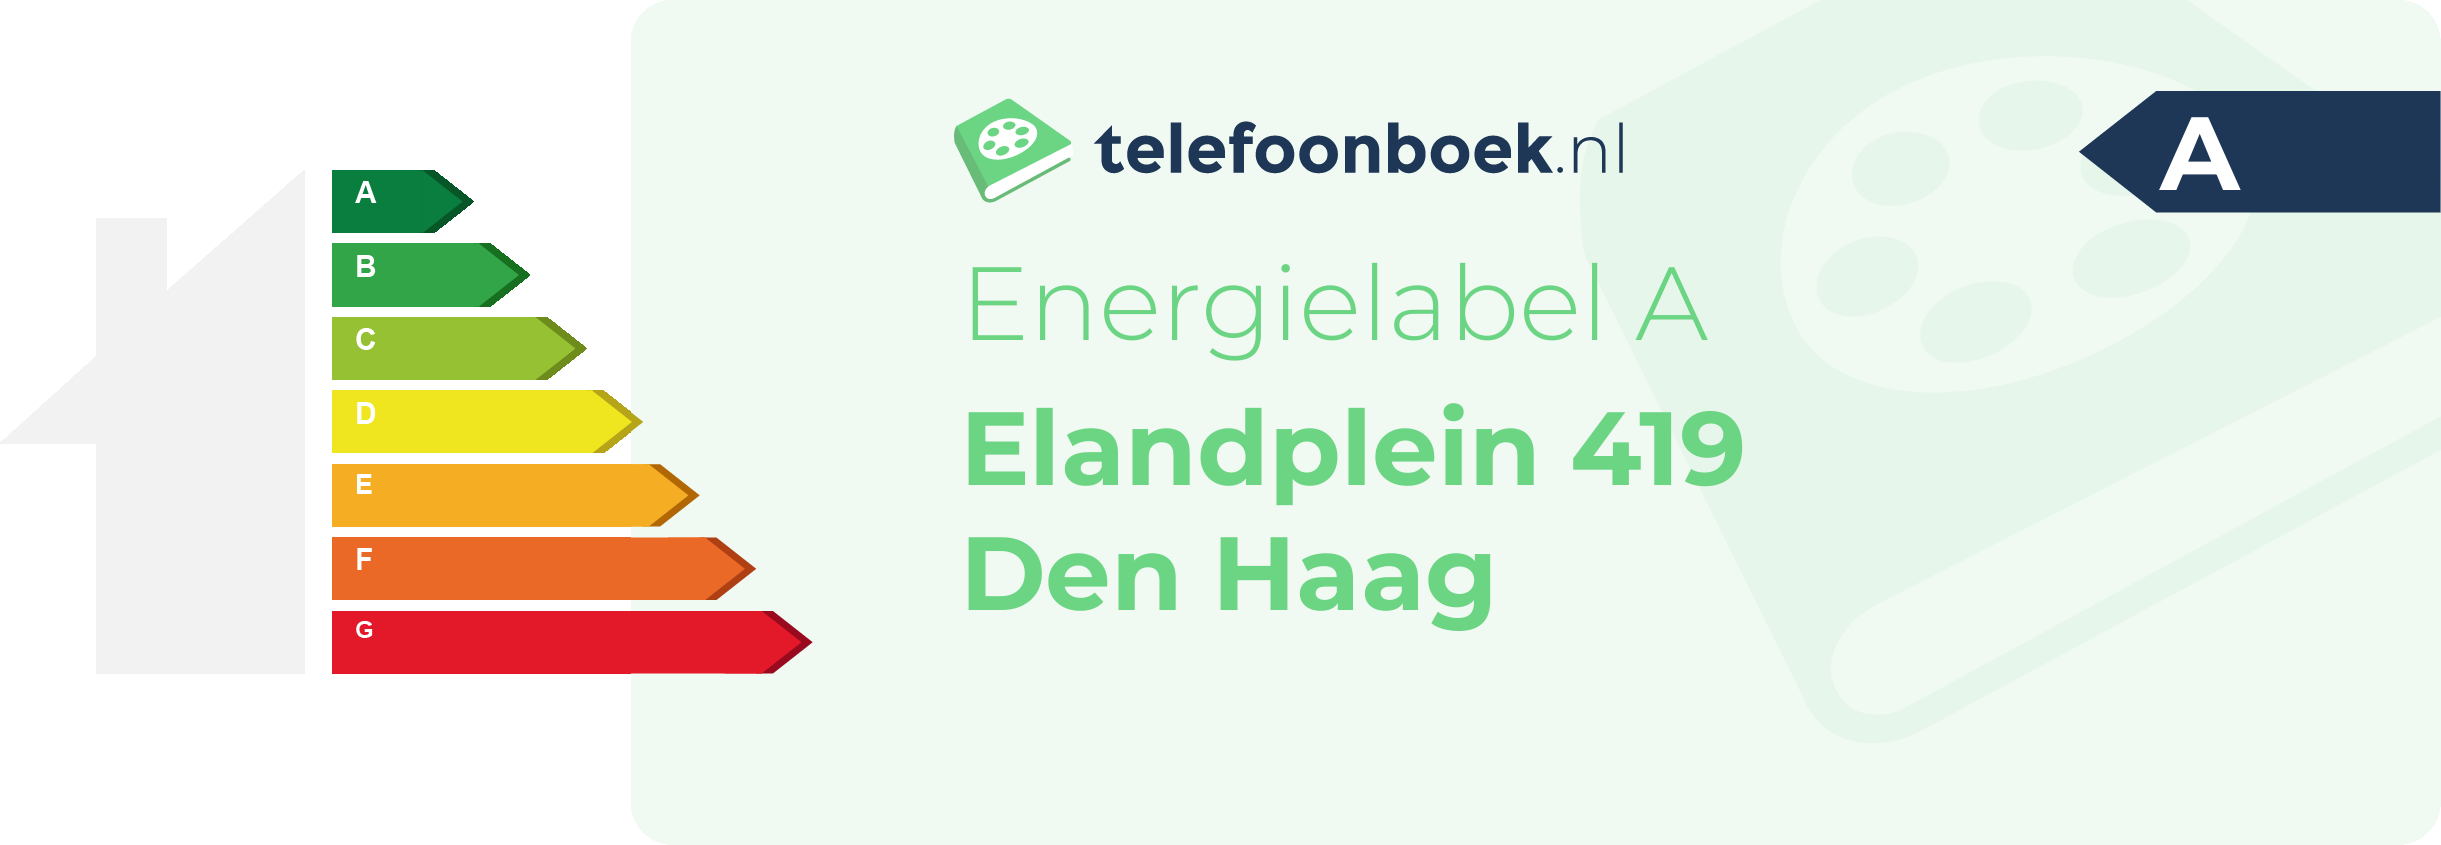 Energielabel Elandplein 419 Den Haag